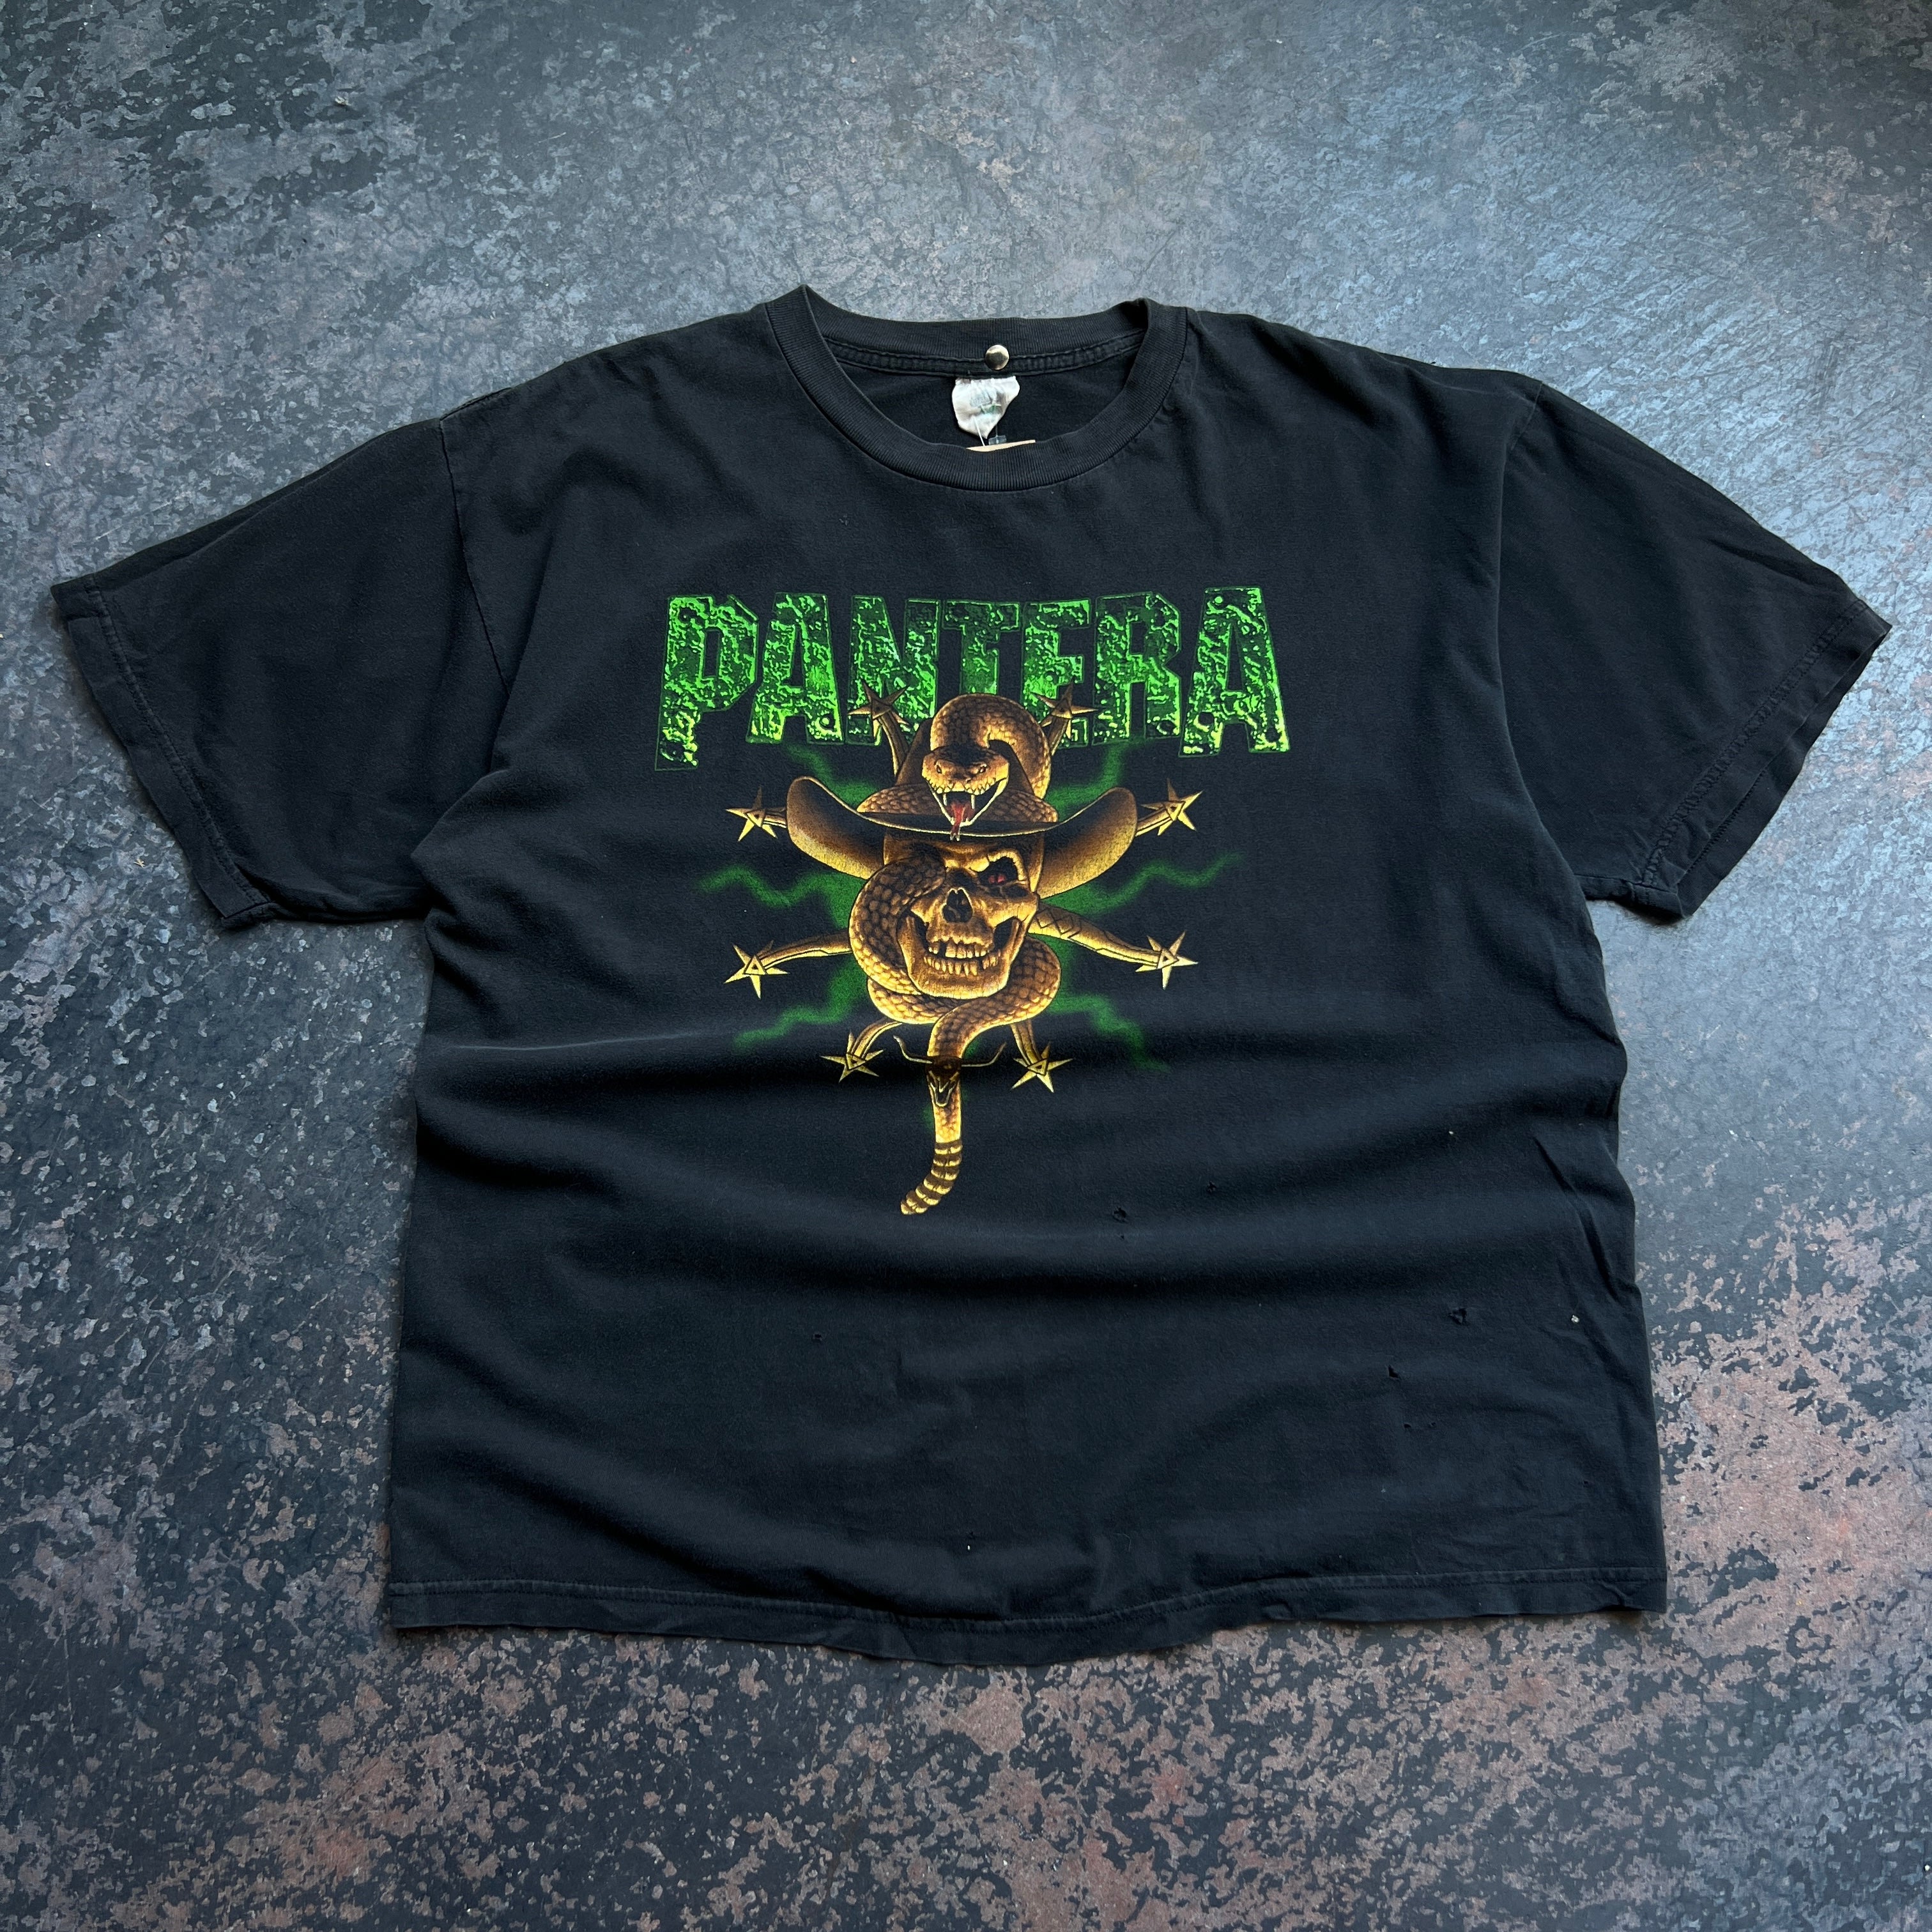 Pantera Skull & Snake T-Shirt Size XL